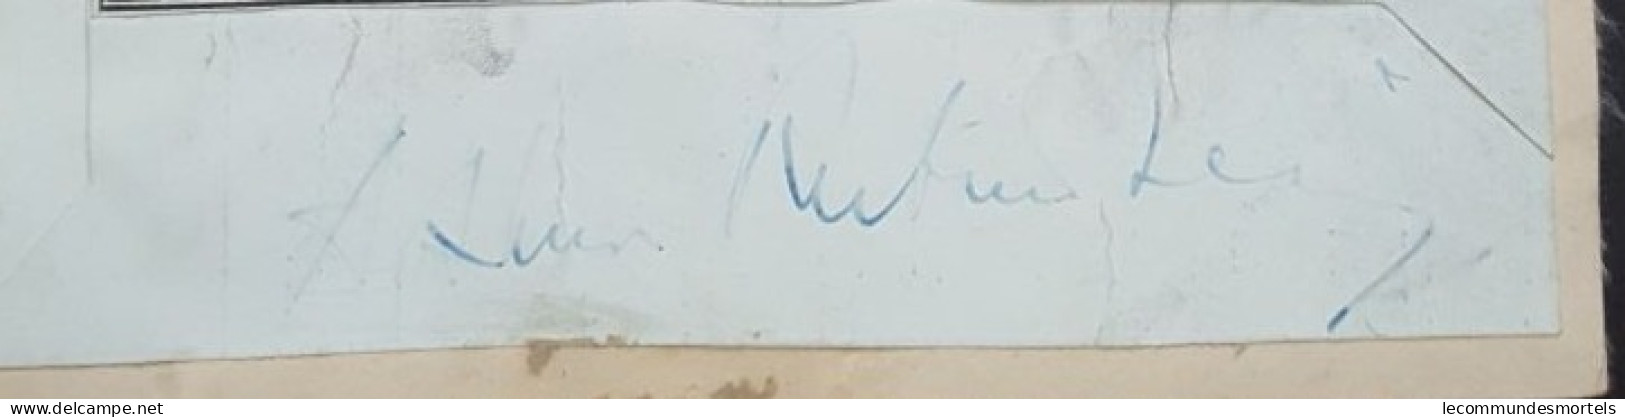 Autographe D'Arthur Rubinstein, Photo De Presse - Autographes